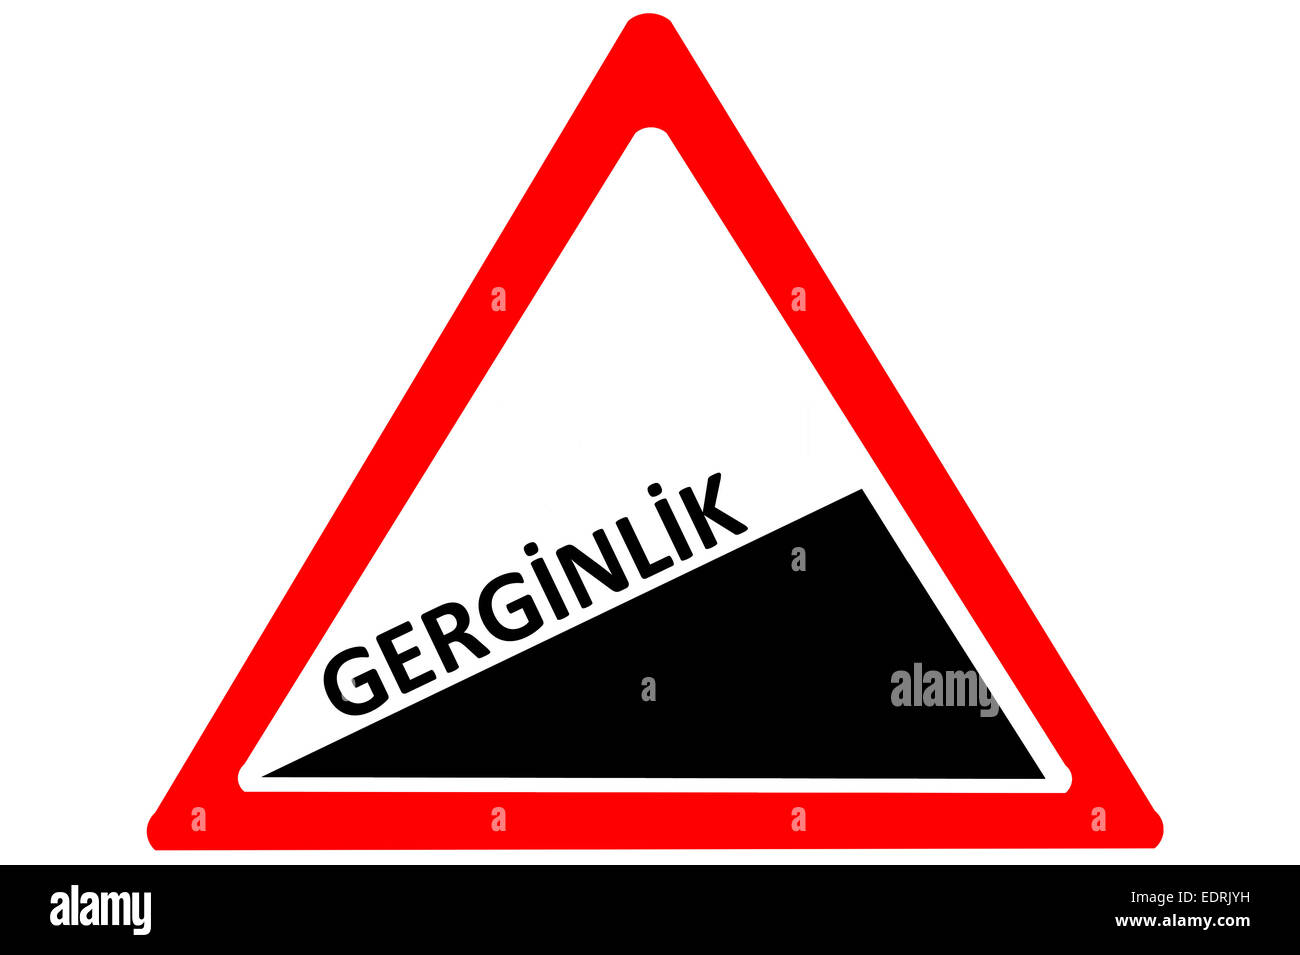 tension Turkish gerginlik increasing warning road sign isolated on white Stock Photo